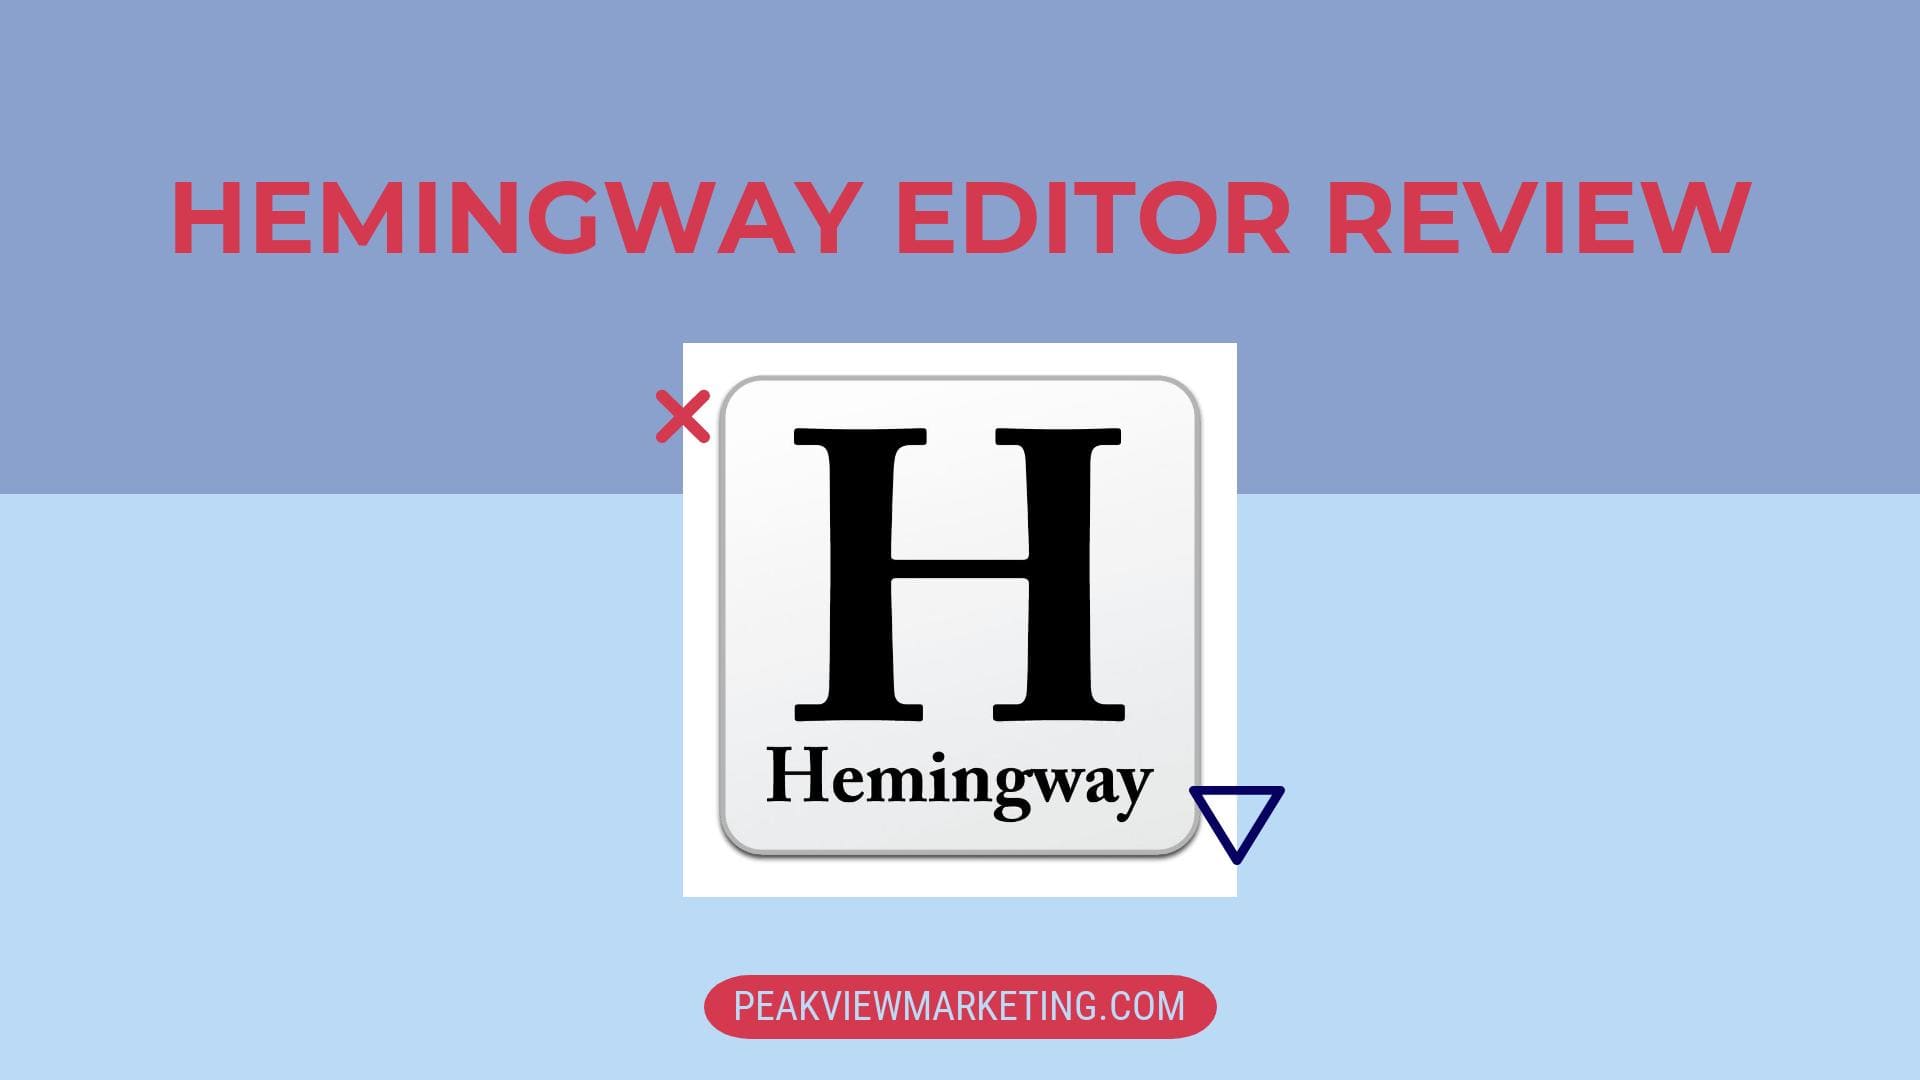 Hemingway Editor Review Image